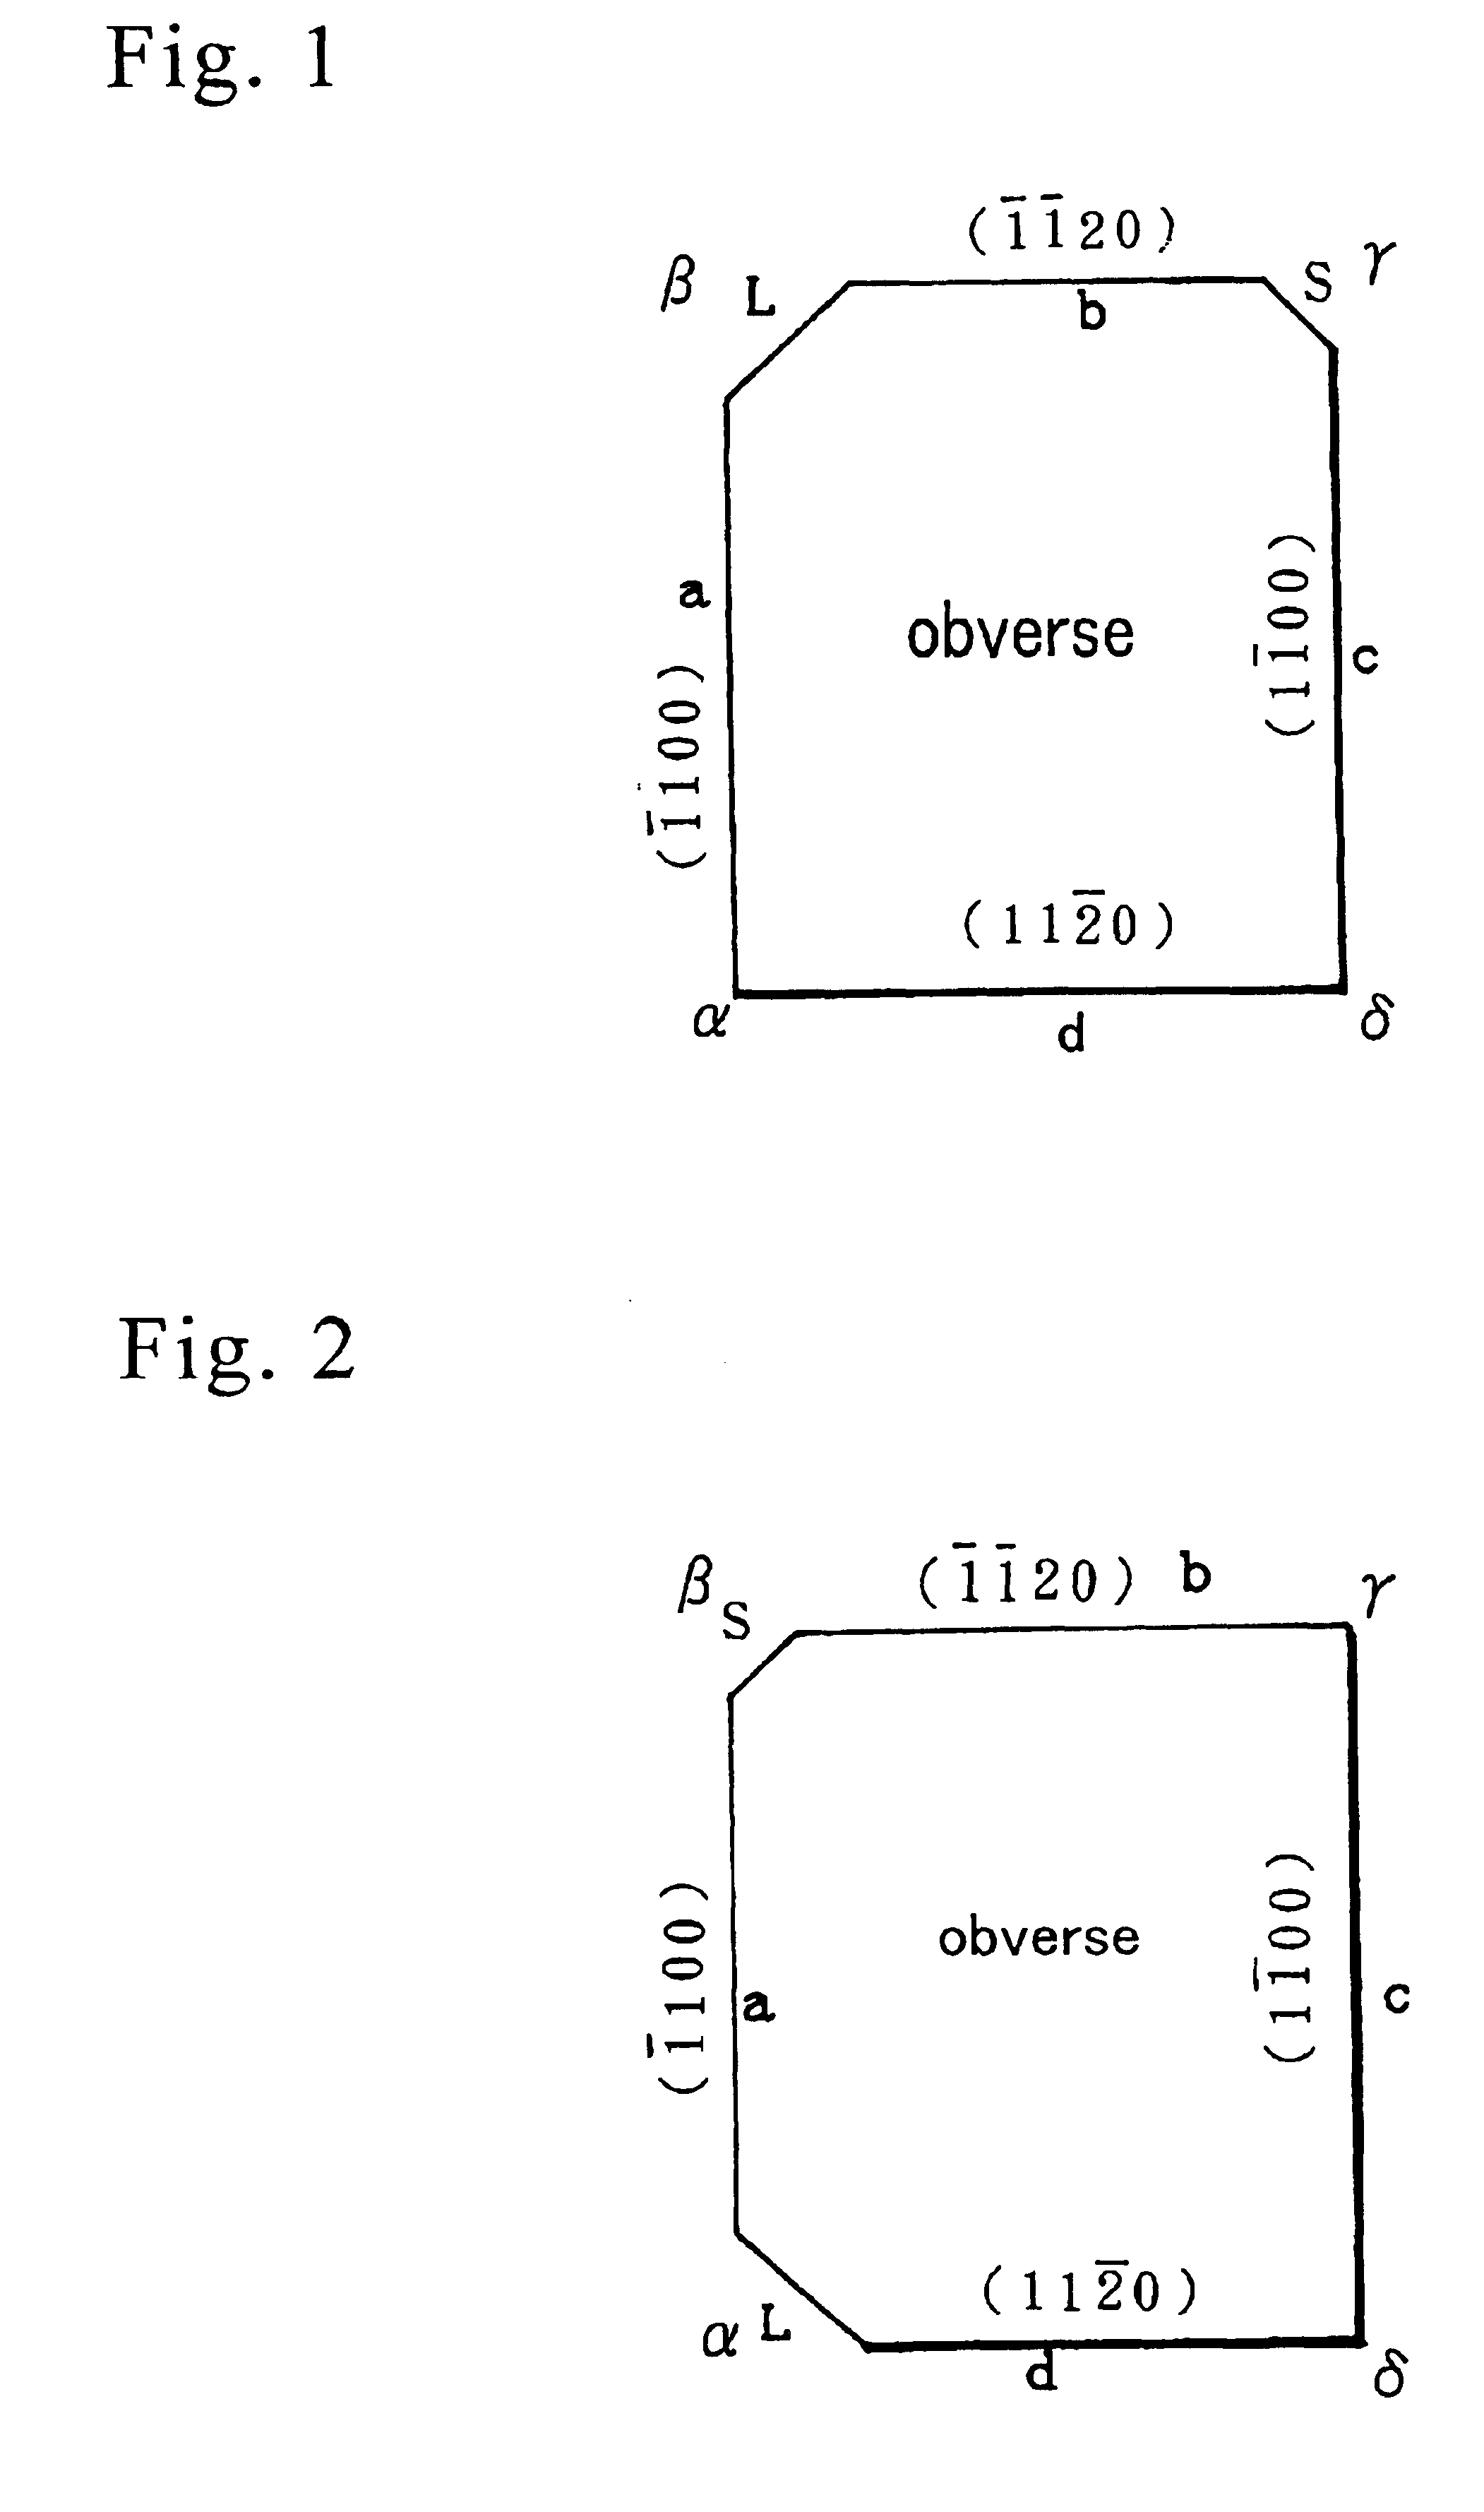 Obverse/reverse discriminative rectangular nitride semiconductor wafer